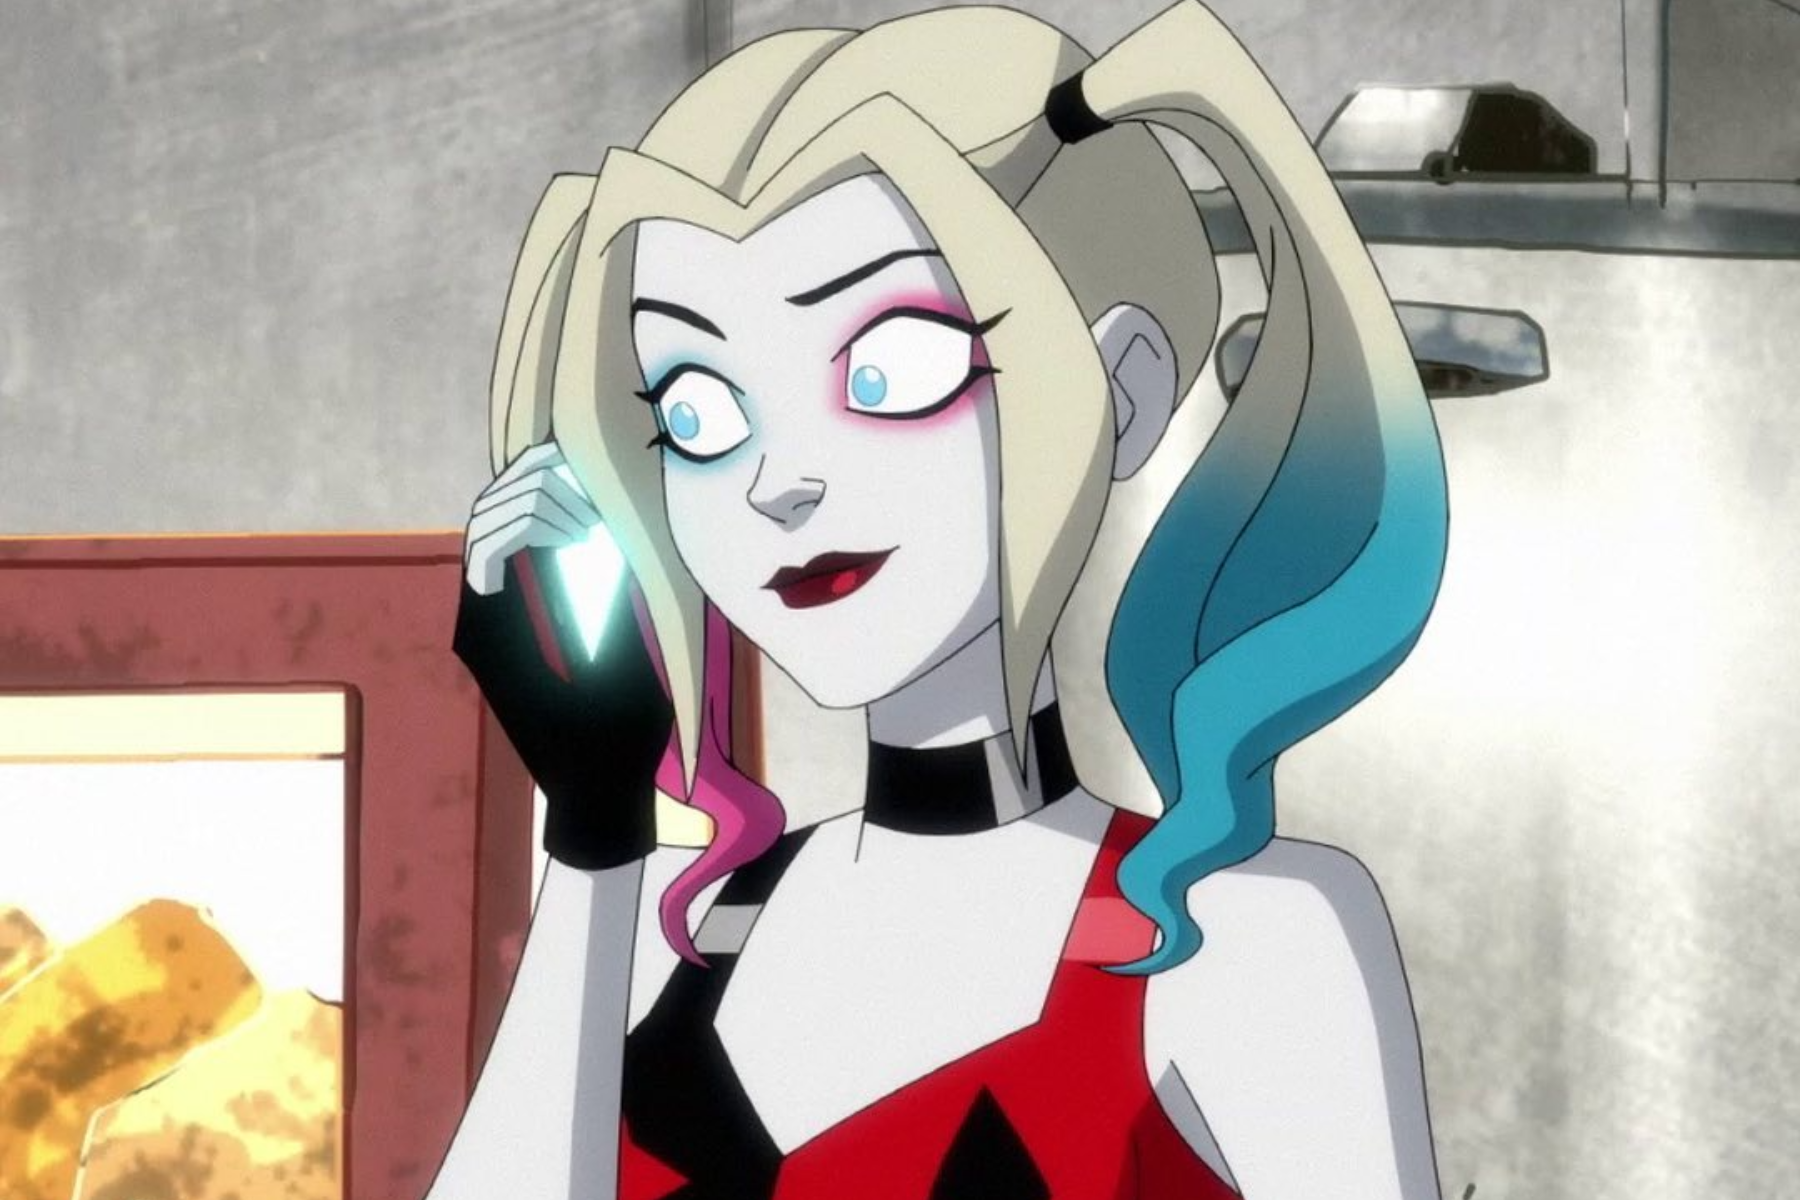 Harley Quinn is on a phone call